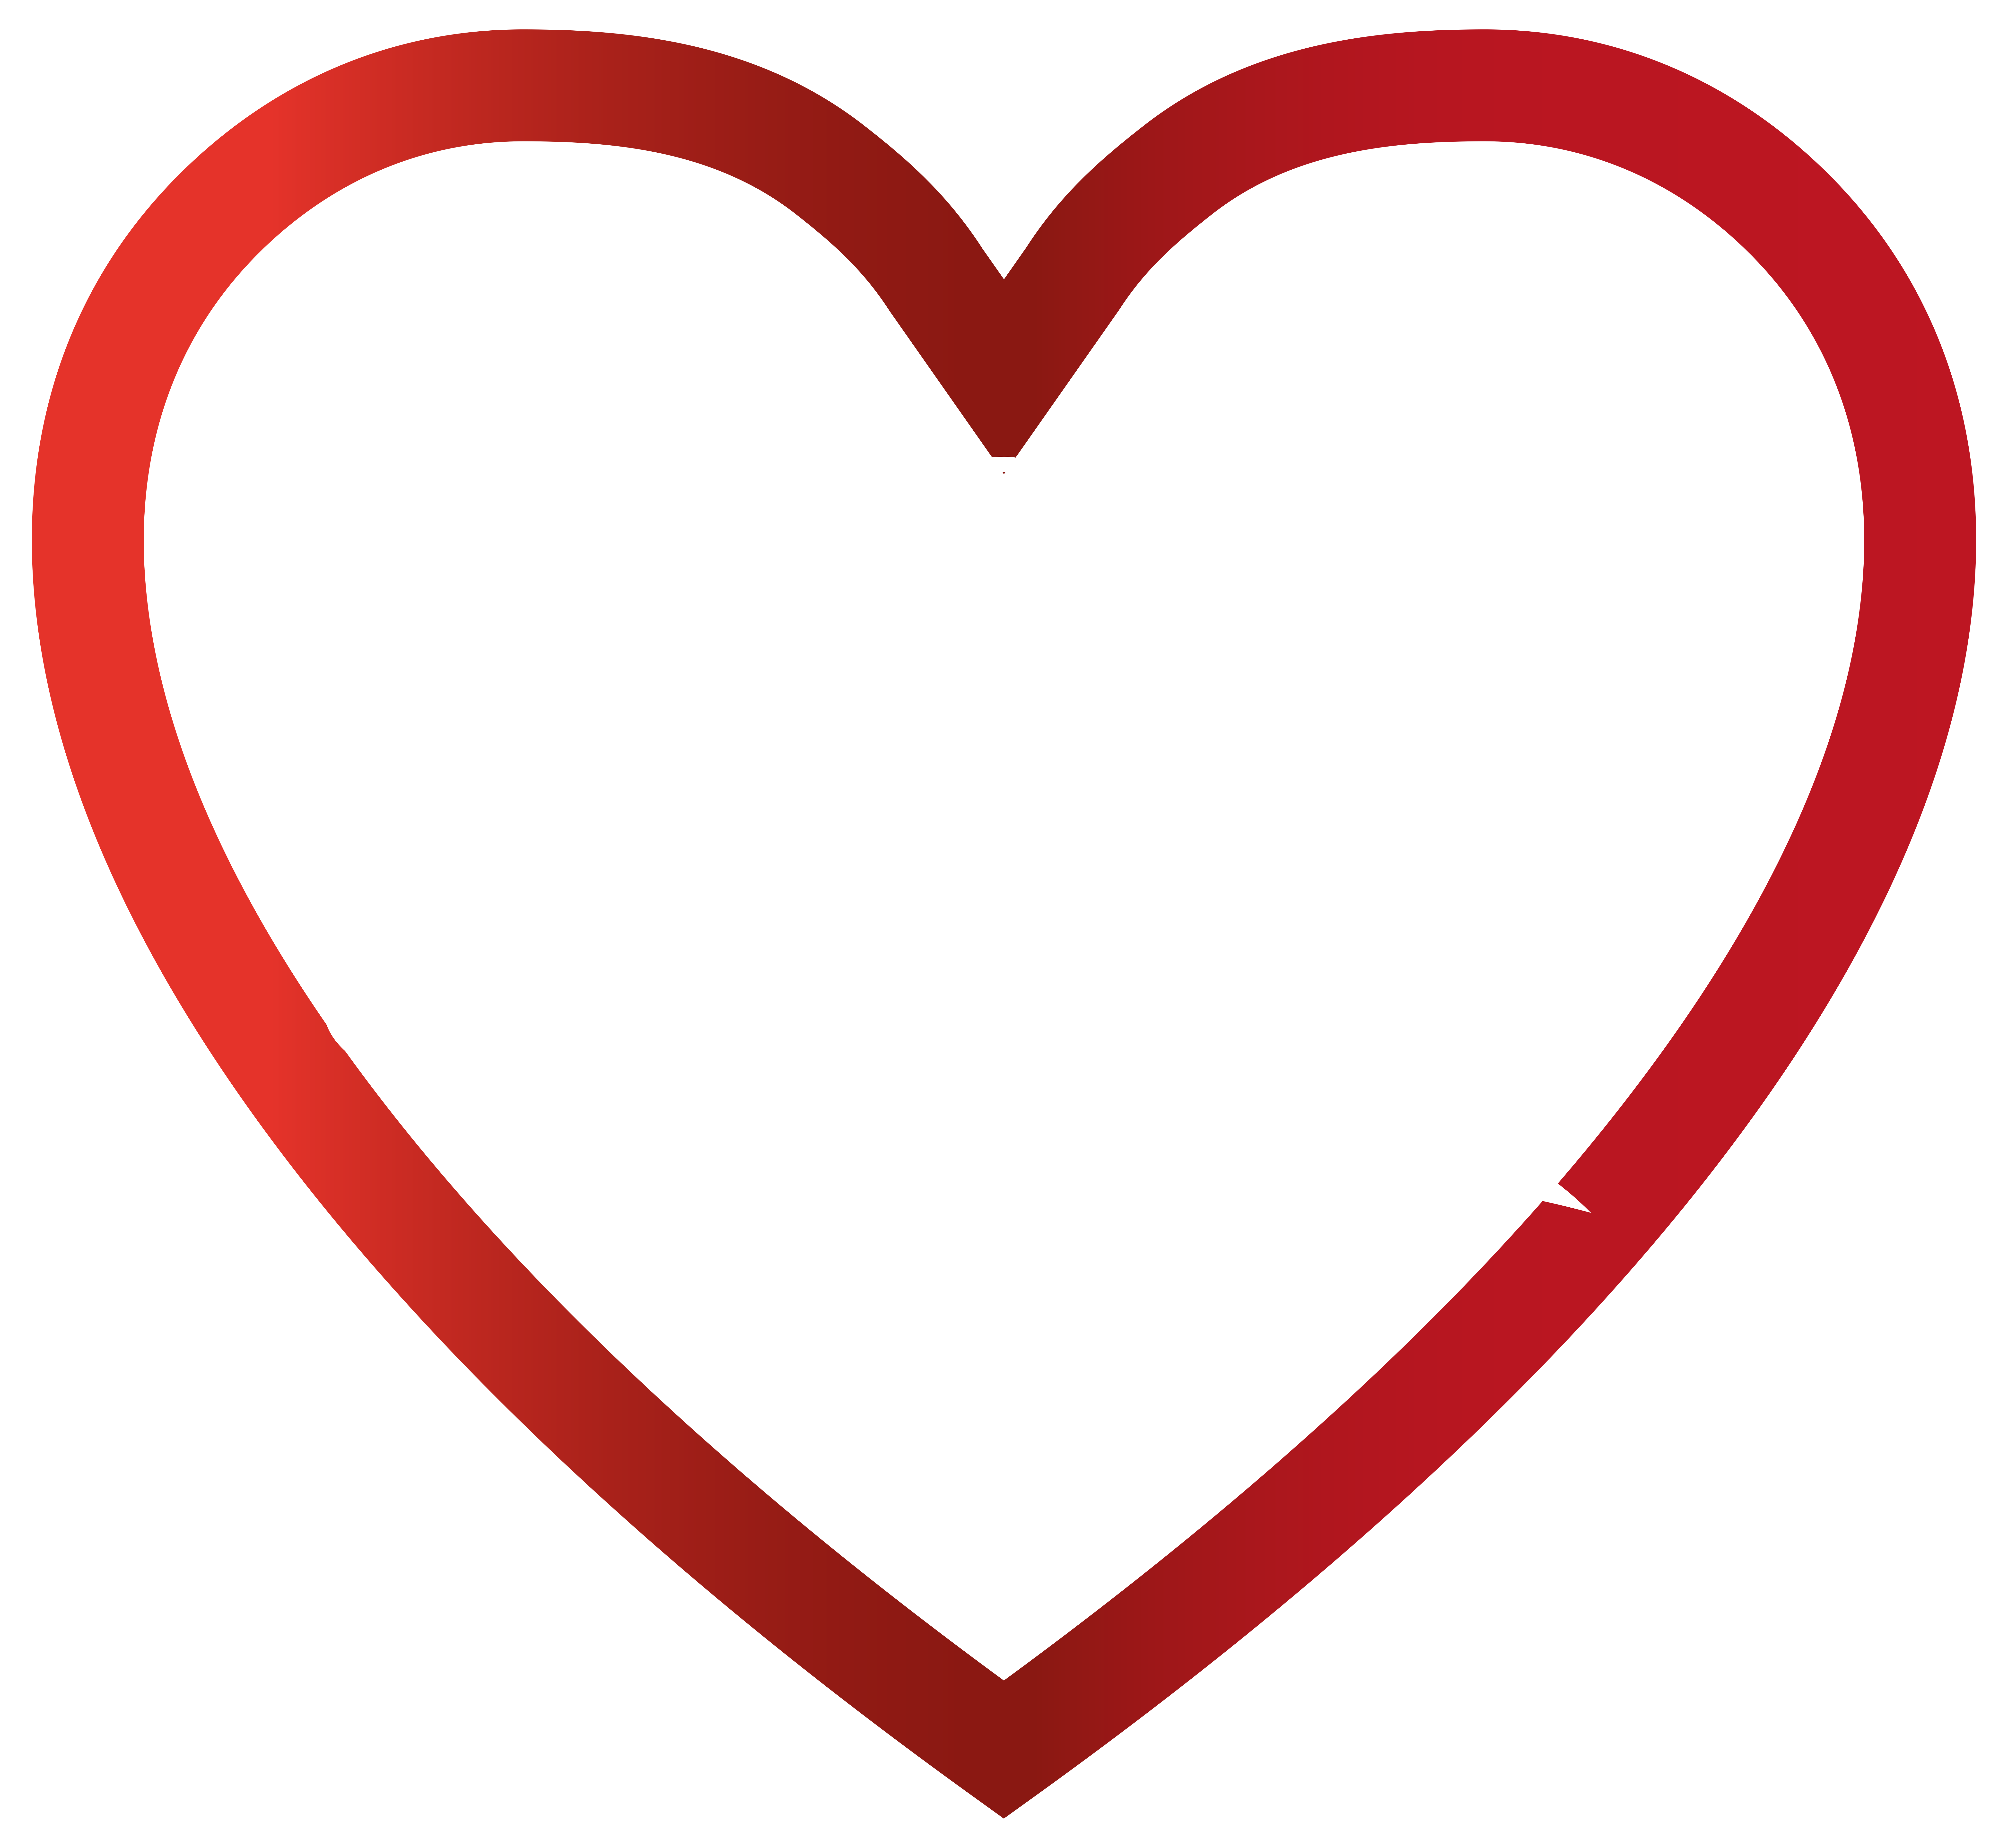 Love Heart Transparent PNG Clip Art Image